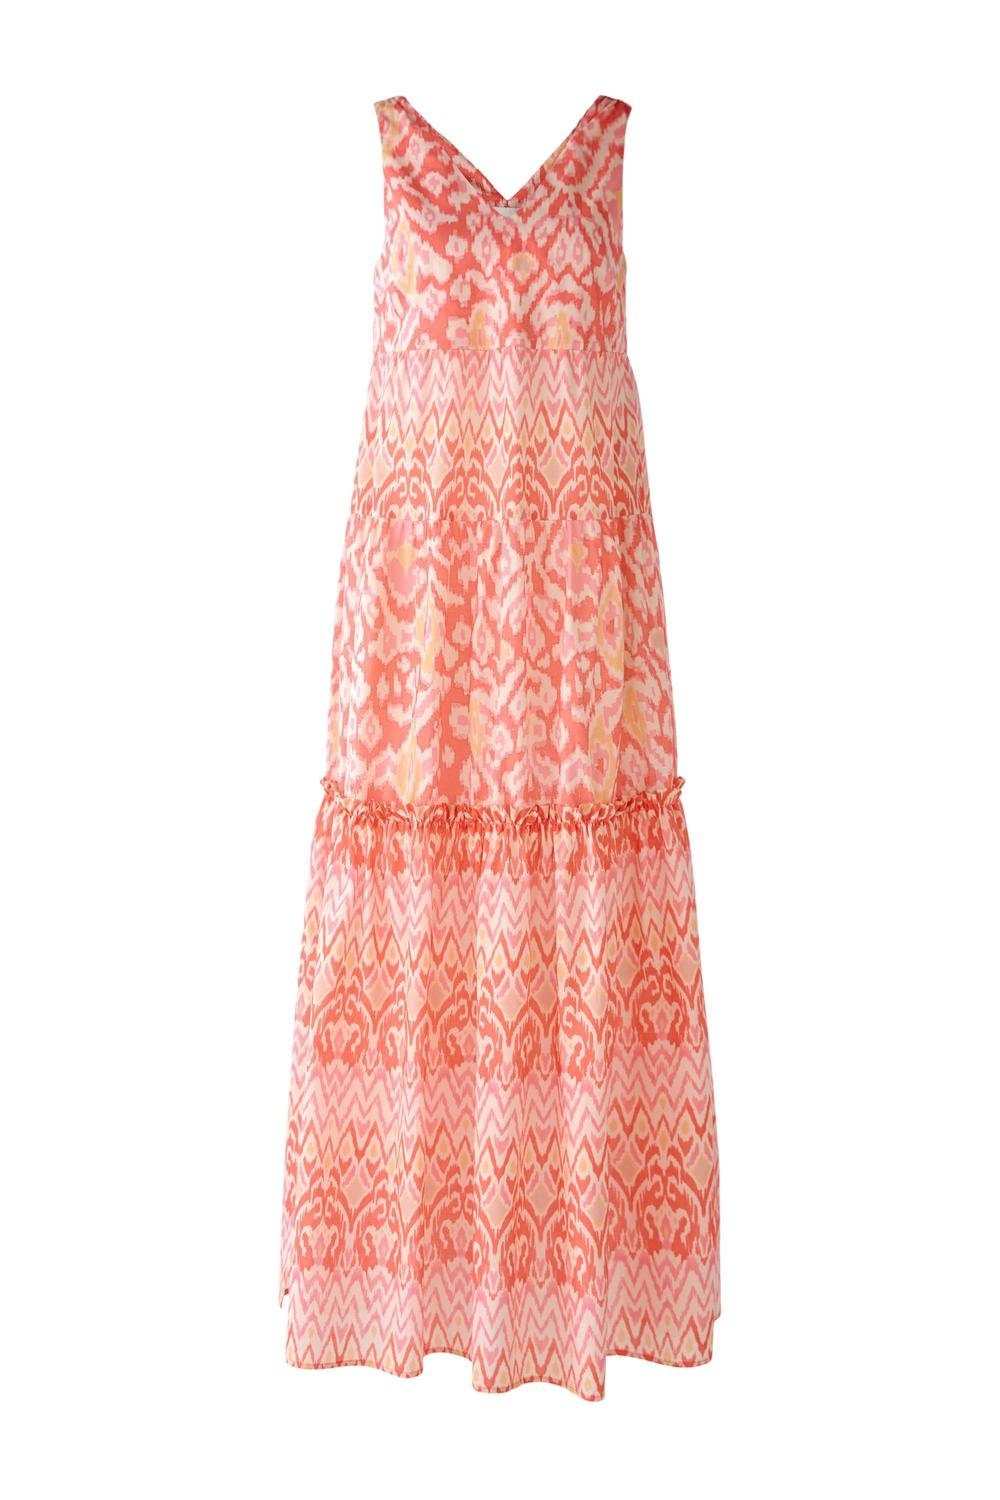 Oui Sommerkleid Kleid, rose orange